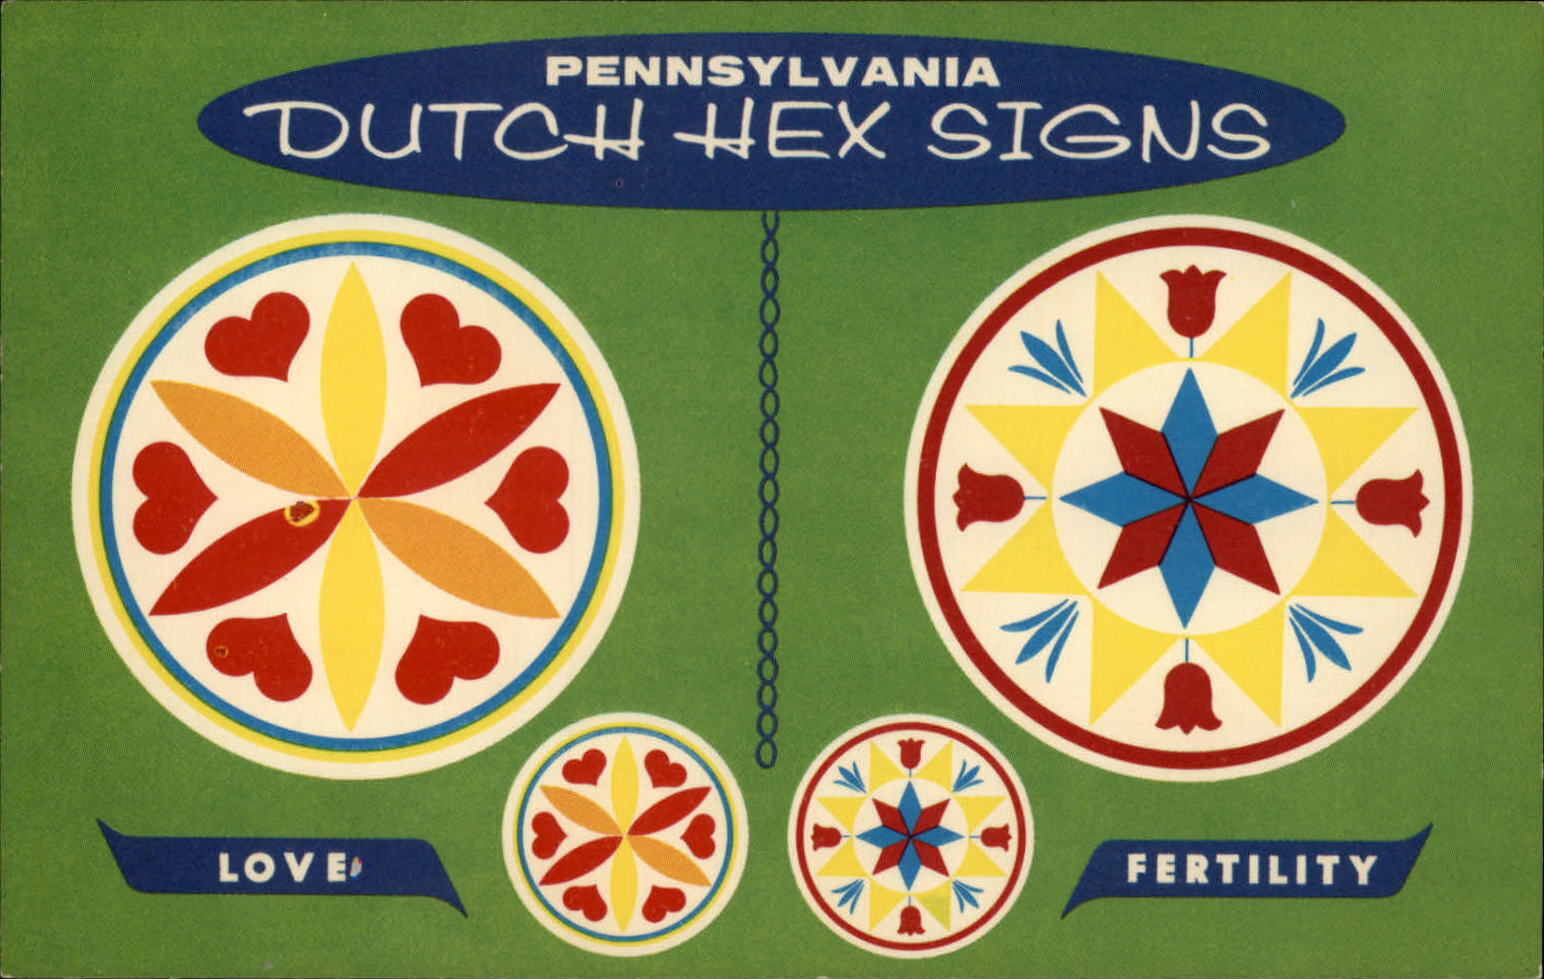 Pennsylvania Dutch Hex Signs for Love & Fertility unused vintage postcard